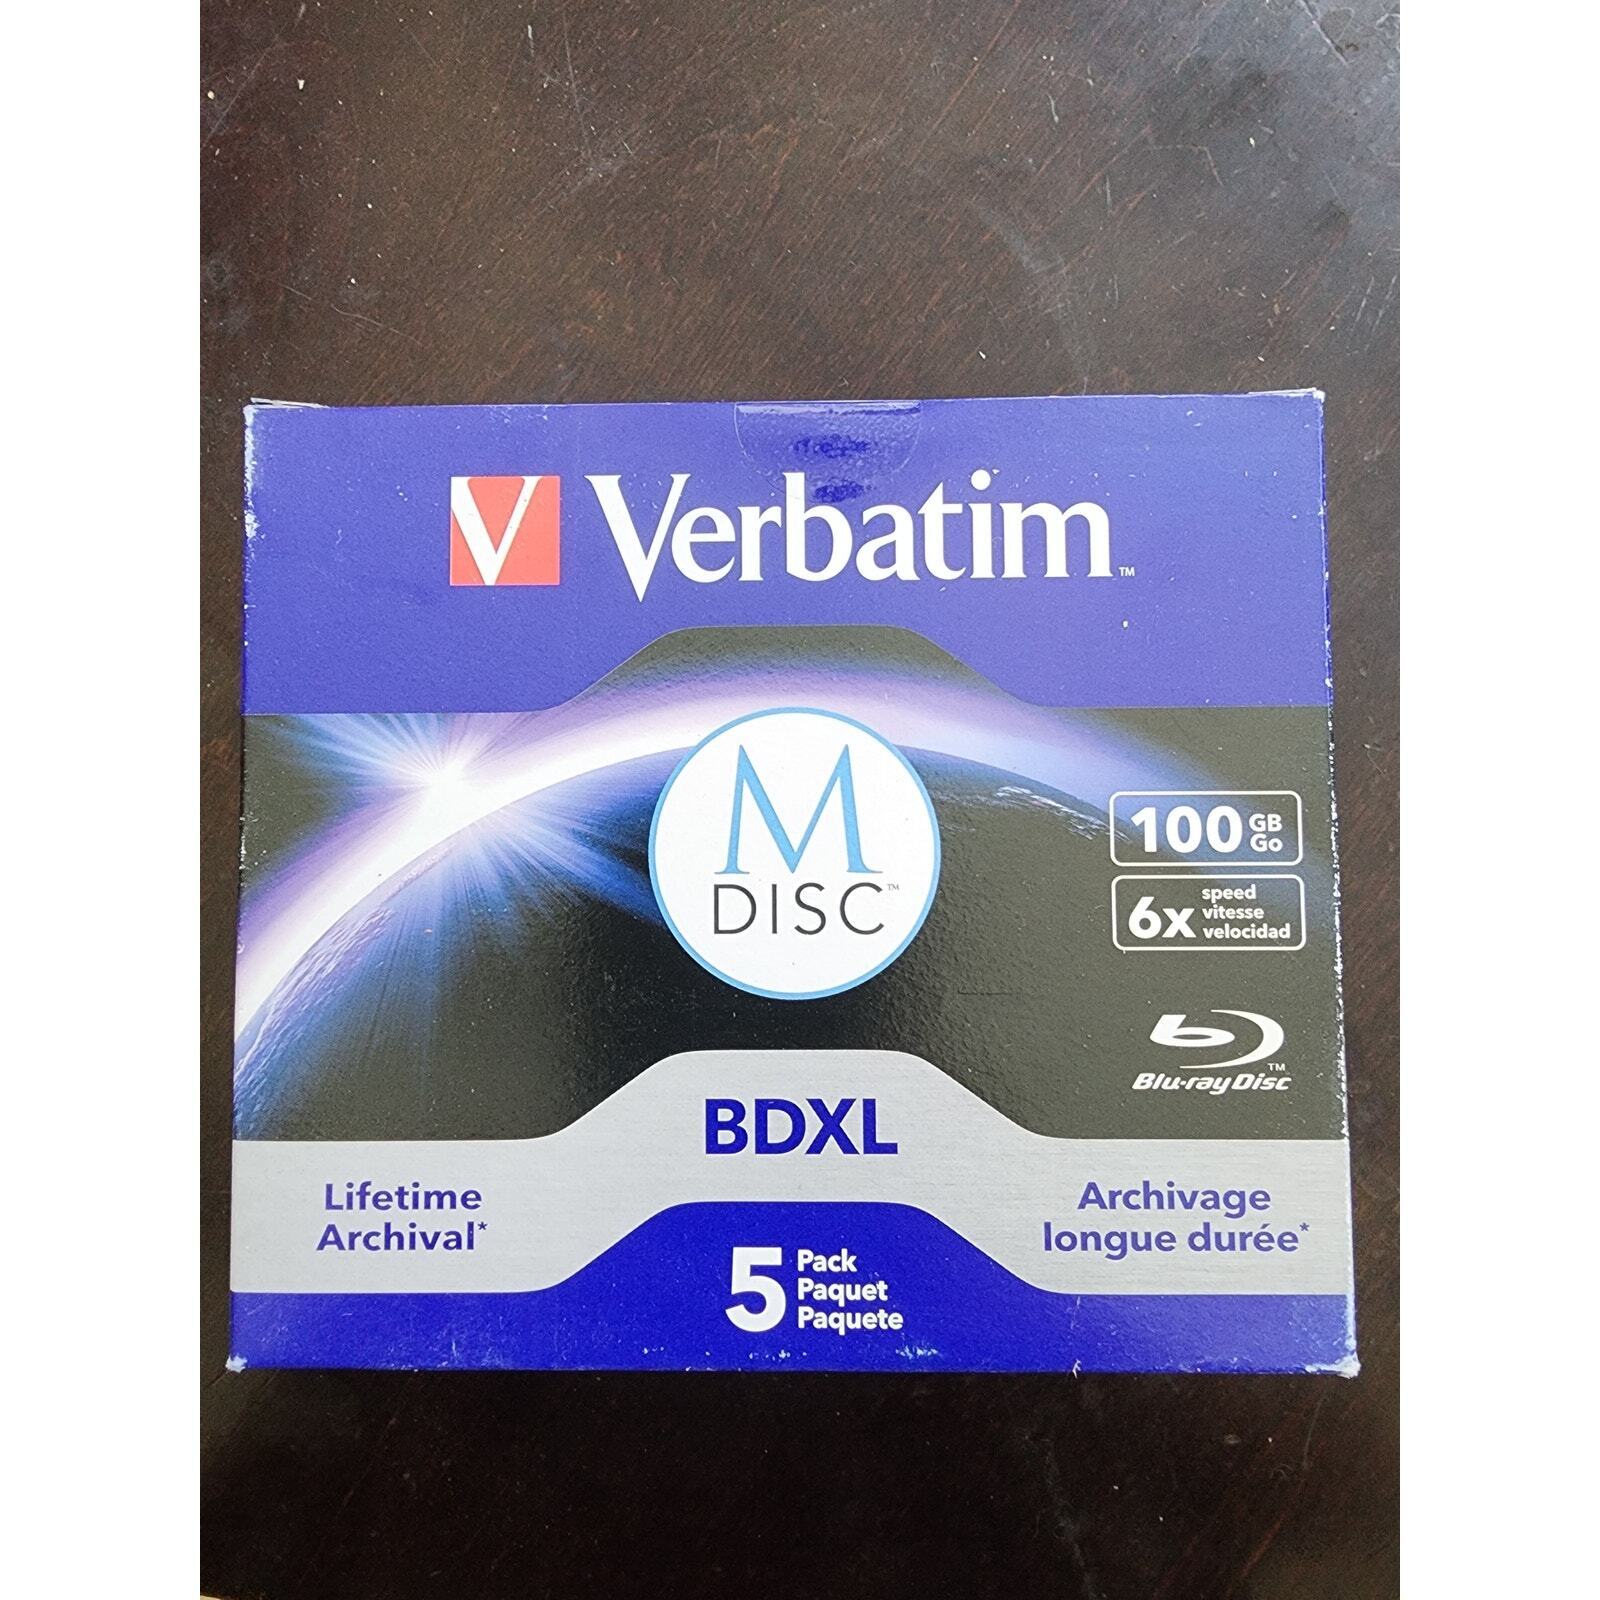 5 pack Verbatim M Disc 100 GB blue ray